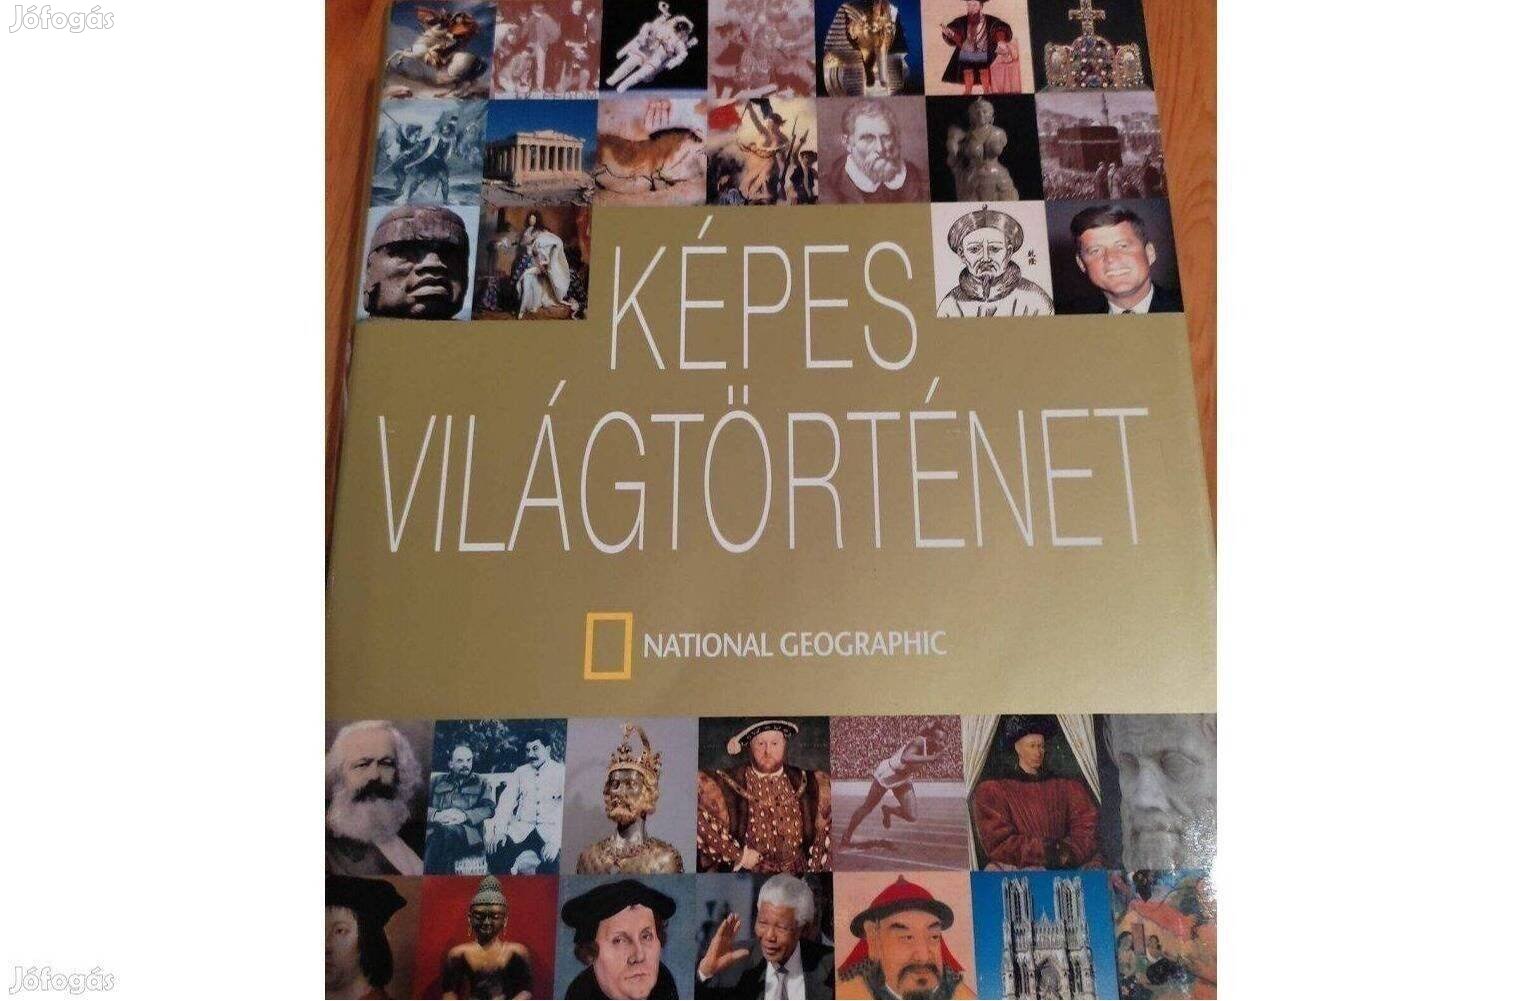 National Geographic : Képes világtörténet